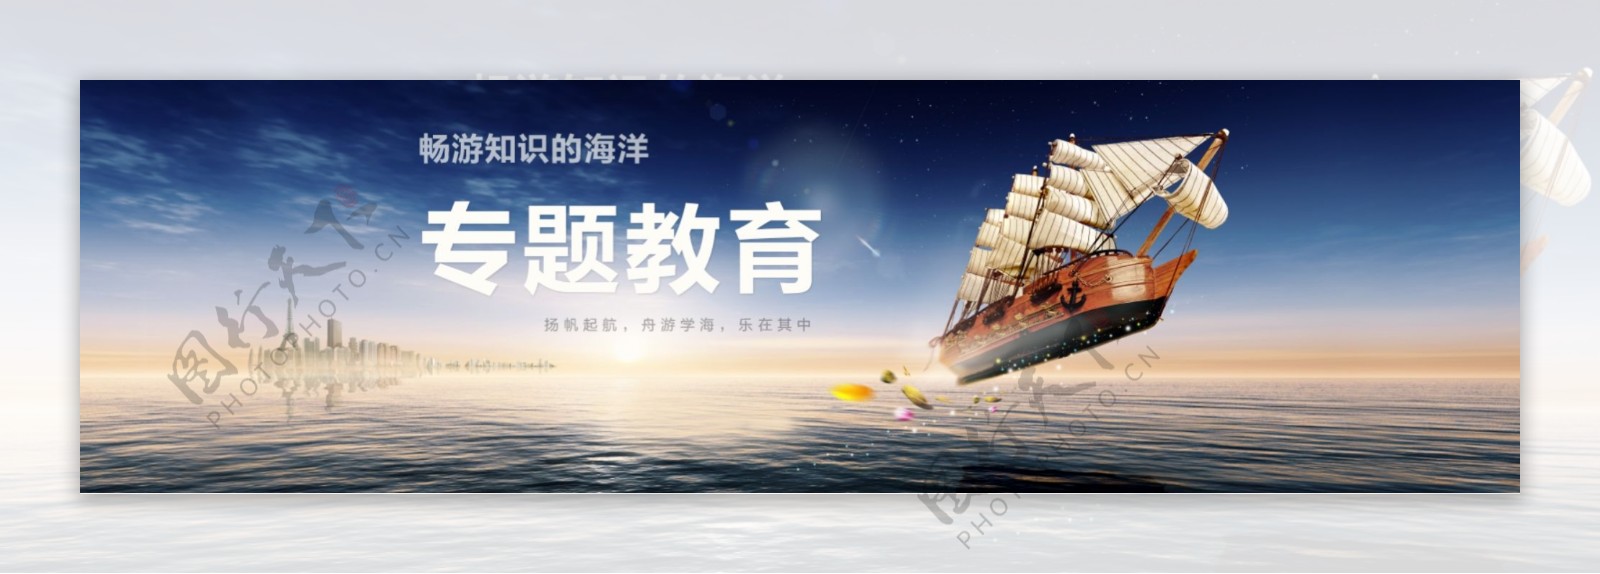 上海教育网站banner